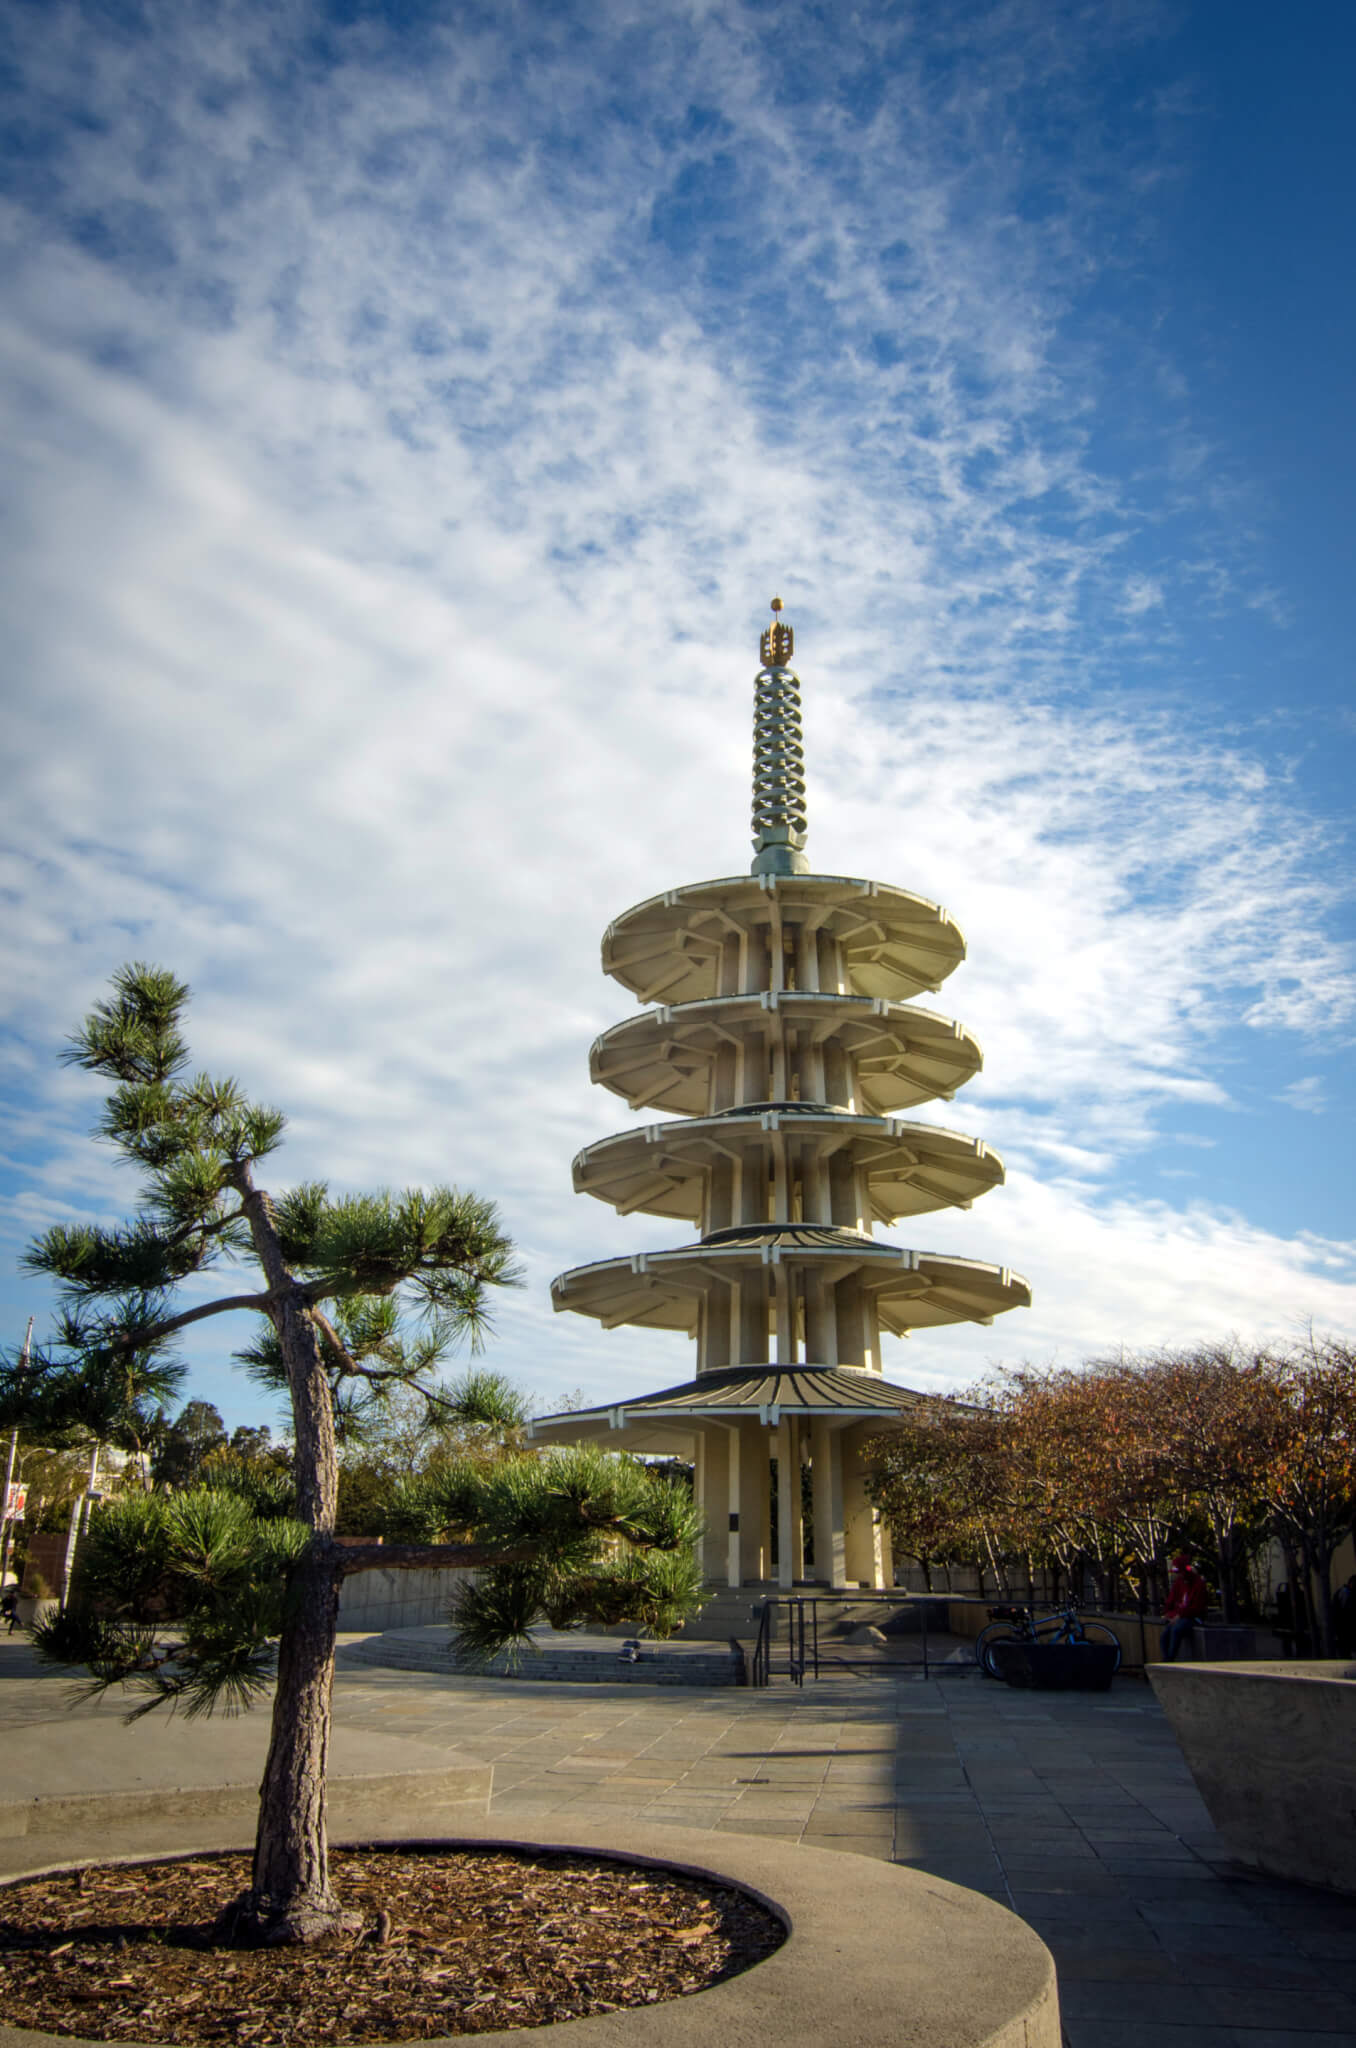 a concrete pagoda in a park